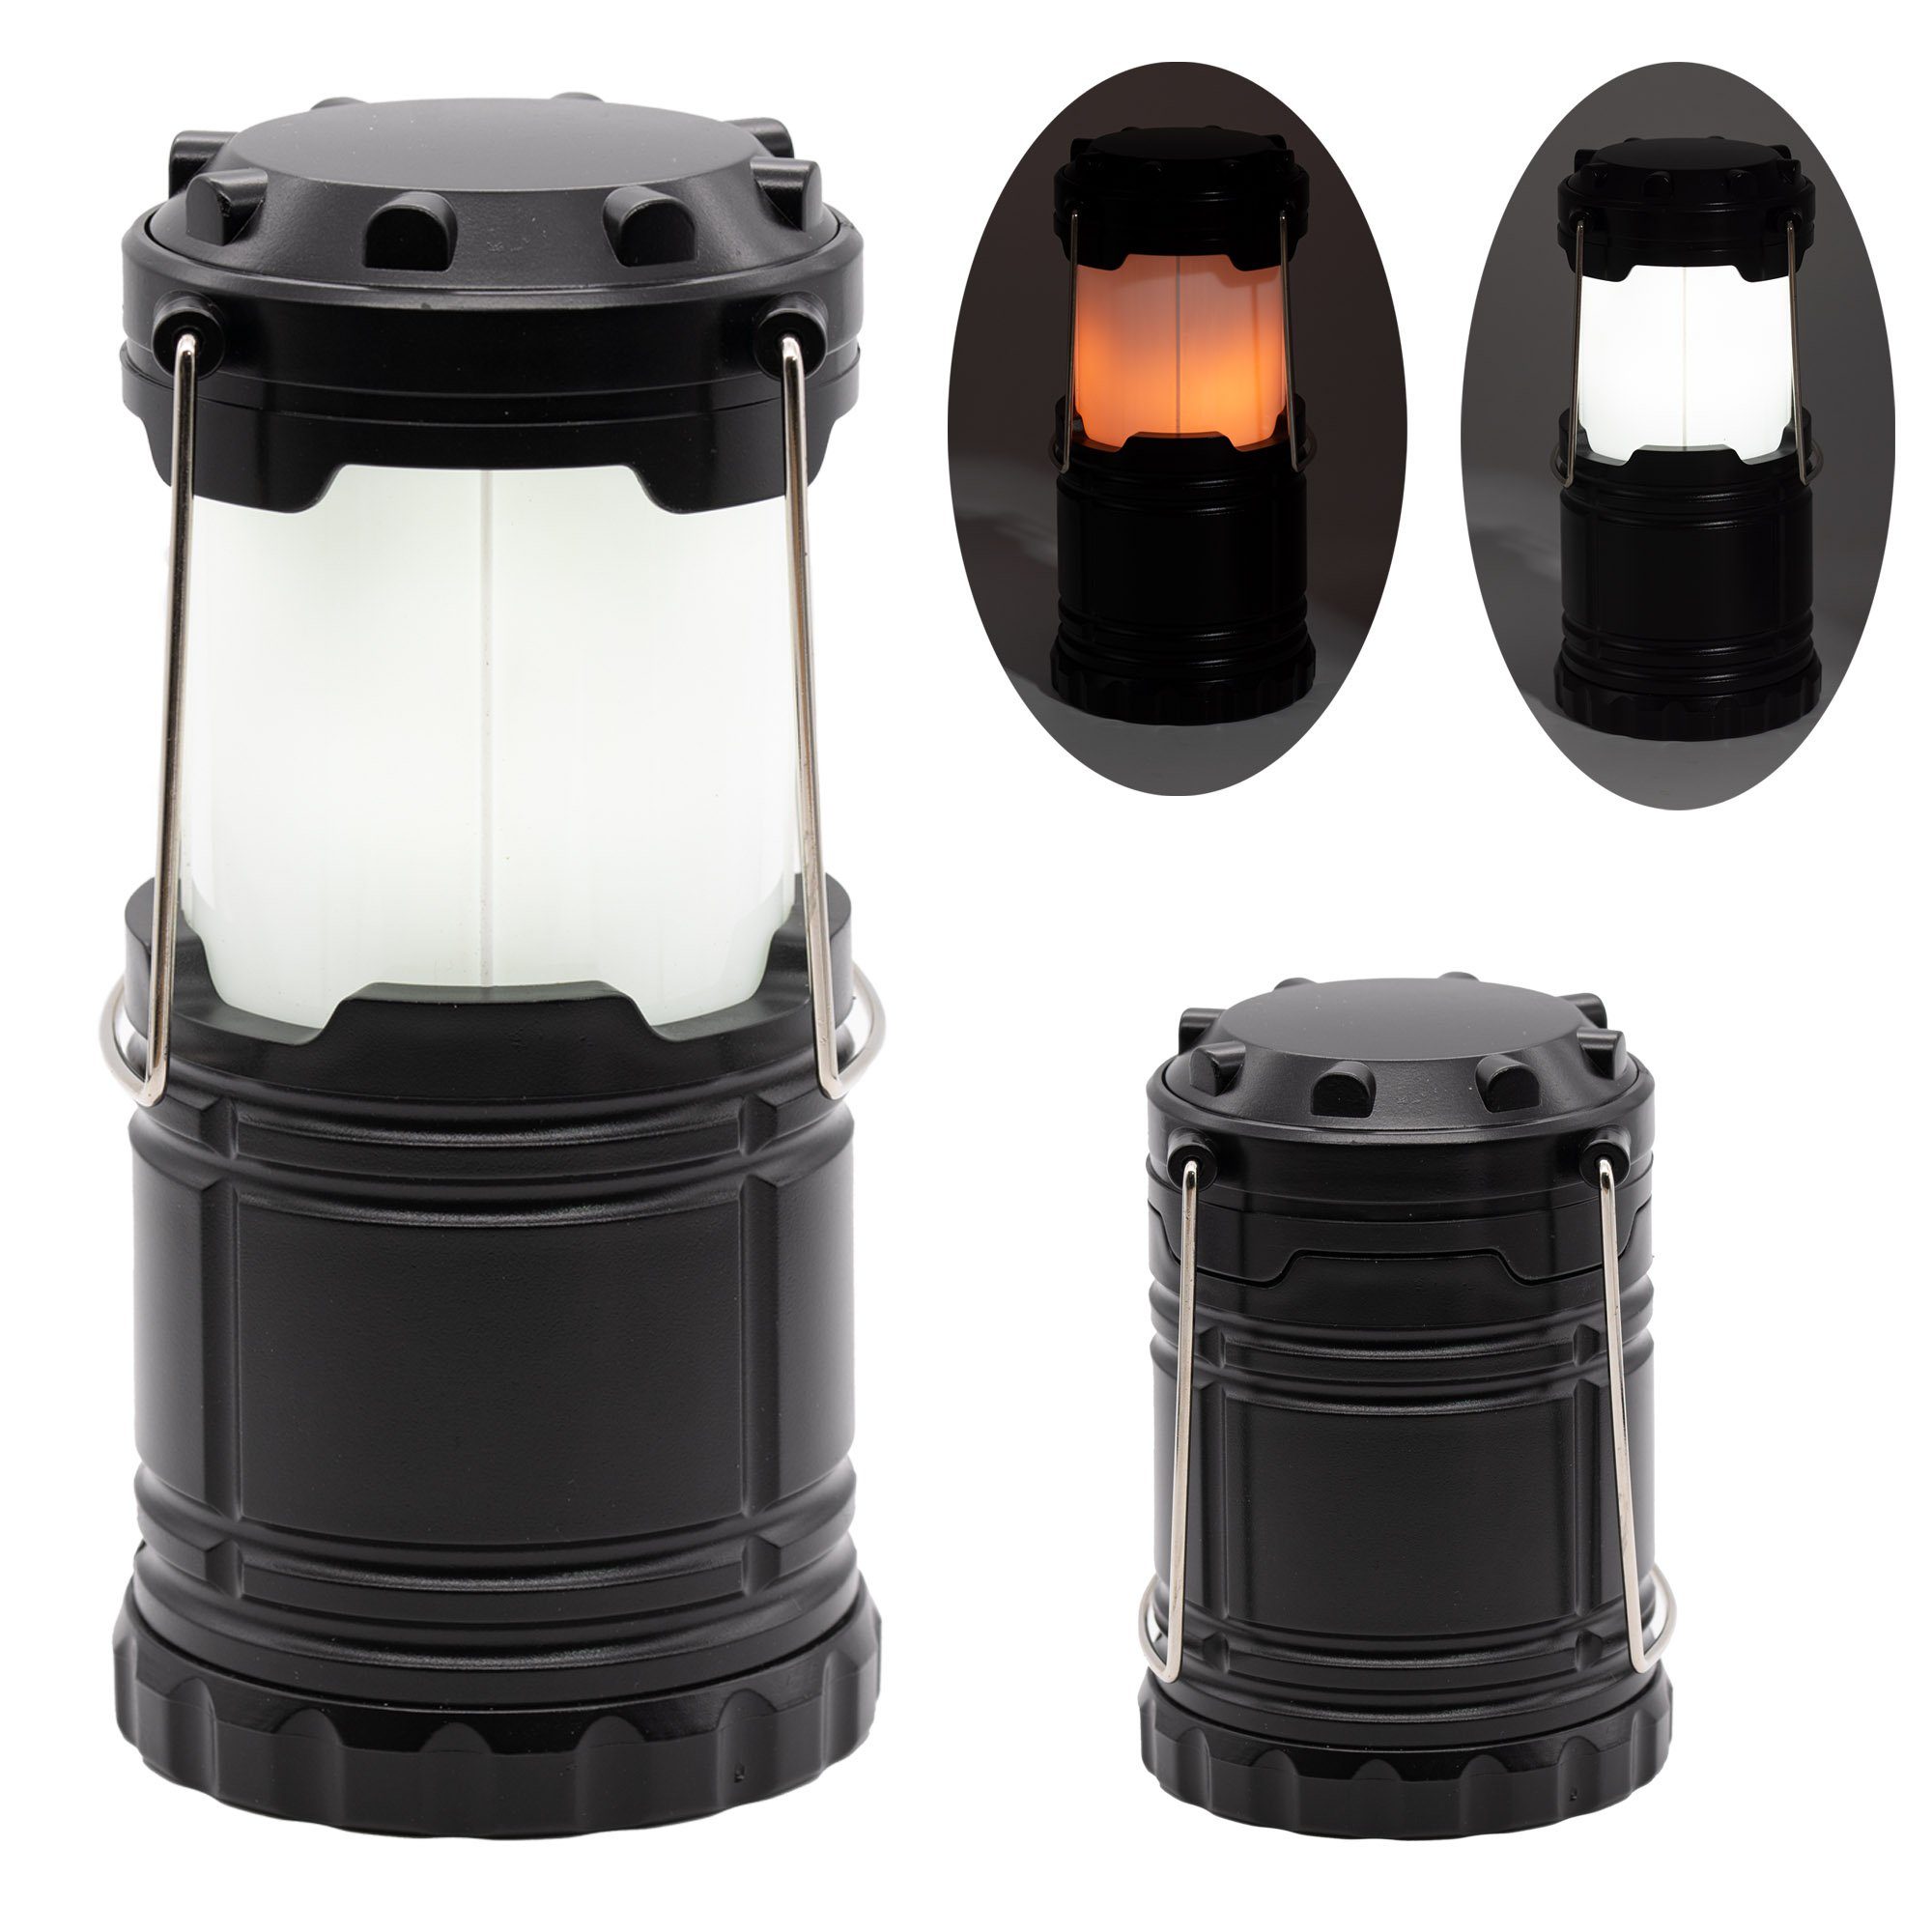 Leuchte Batterie, Lampe Garten, Effekt BENSON Zelt Campinglampe Flammen, LED Laterne, 2in1 Taschenlampe